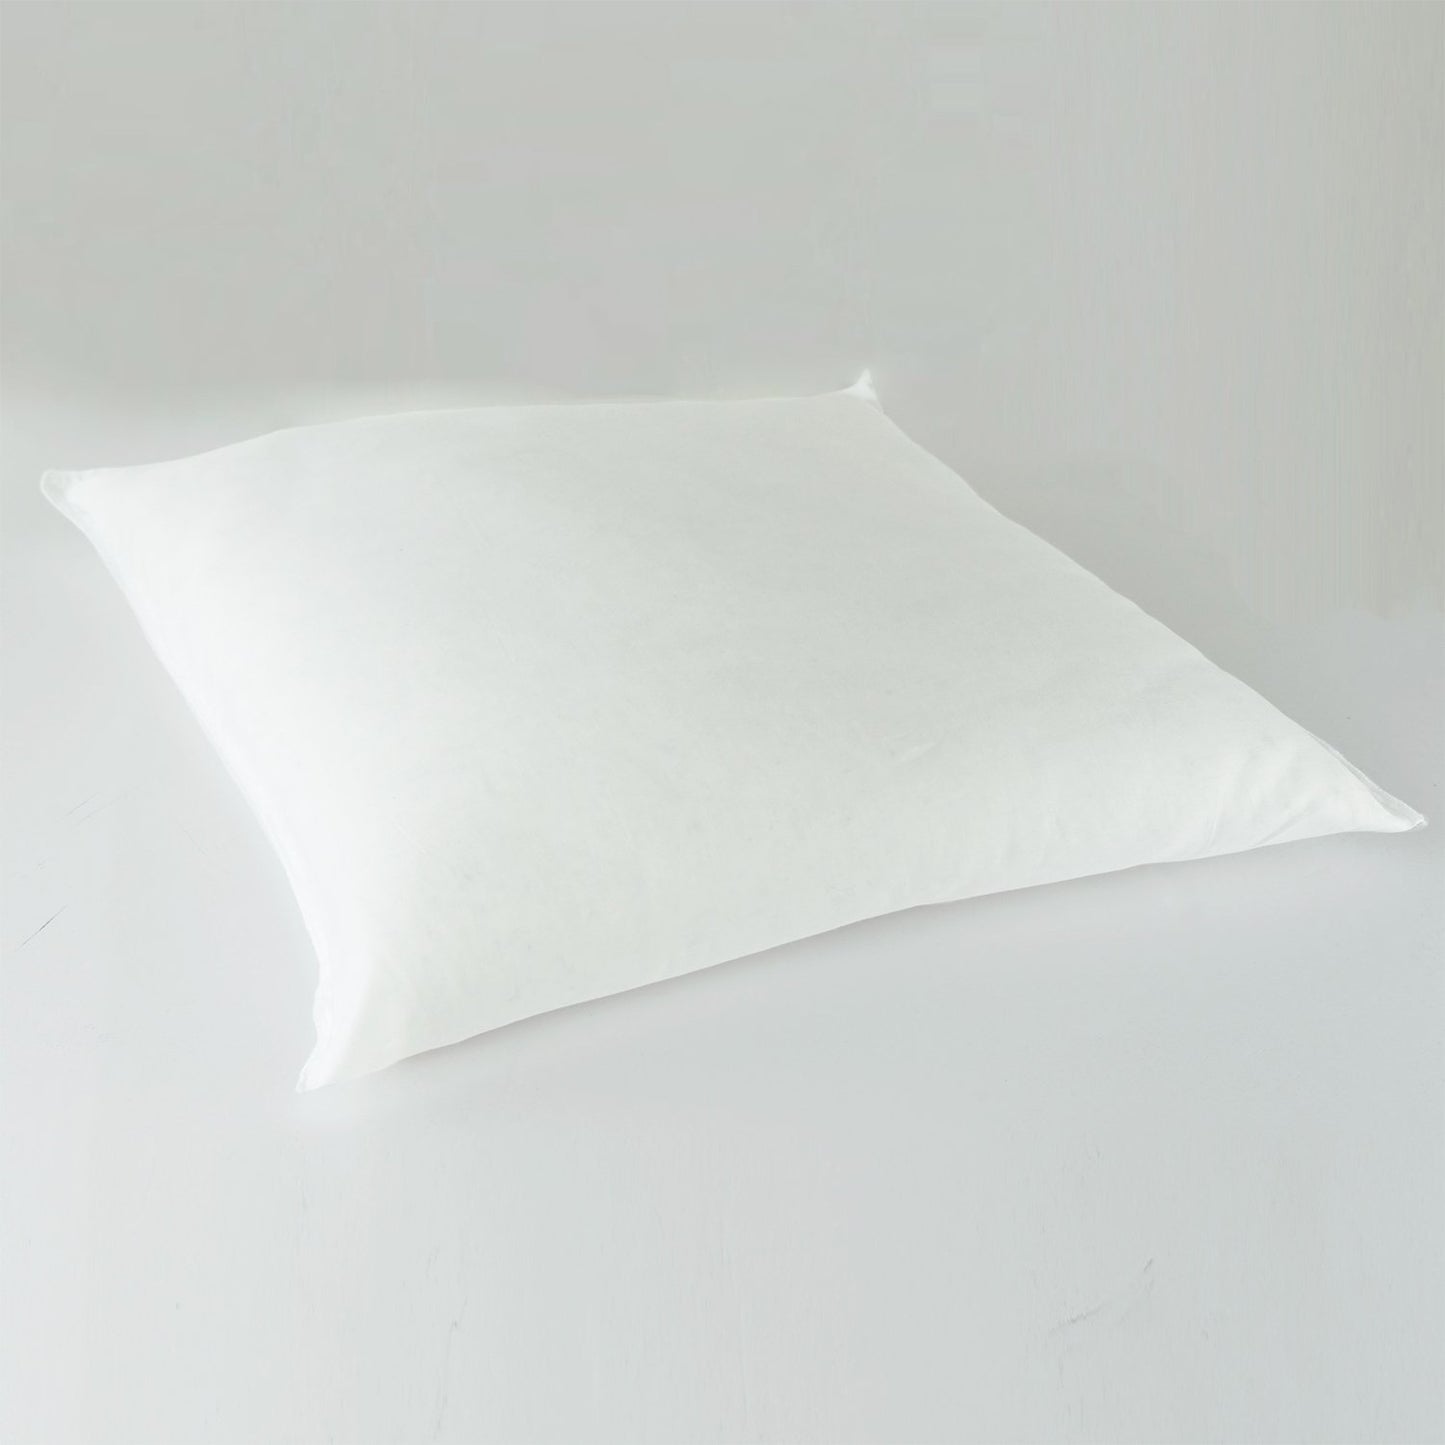 J-Life Sakura Red Zabuton Floor Pillow_Pillows & Shams_Zabuton Floor Pillows_100% Cotton_Reversible_Handmade